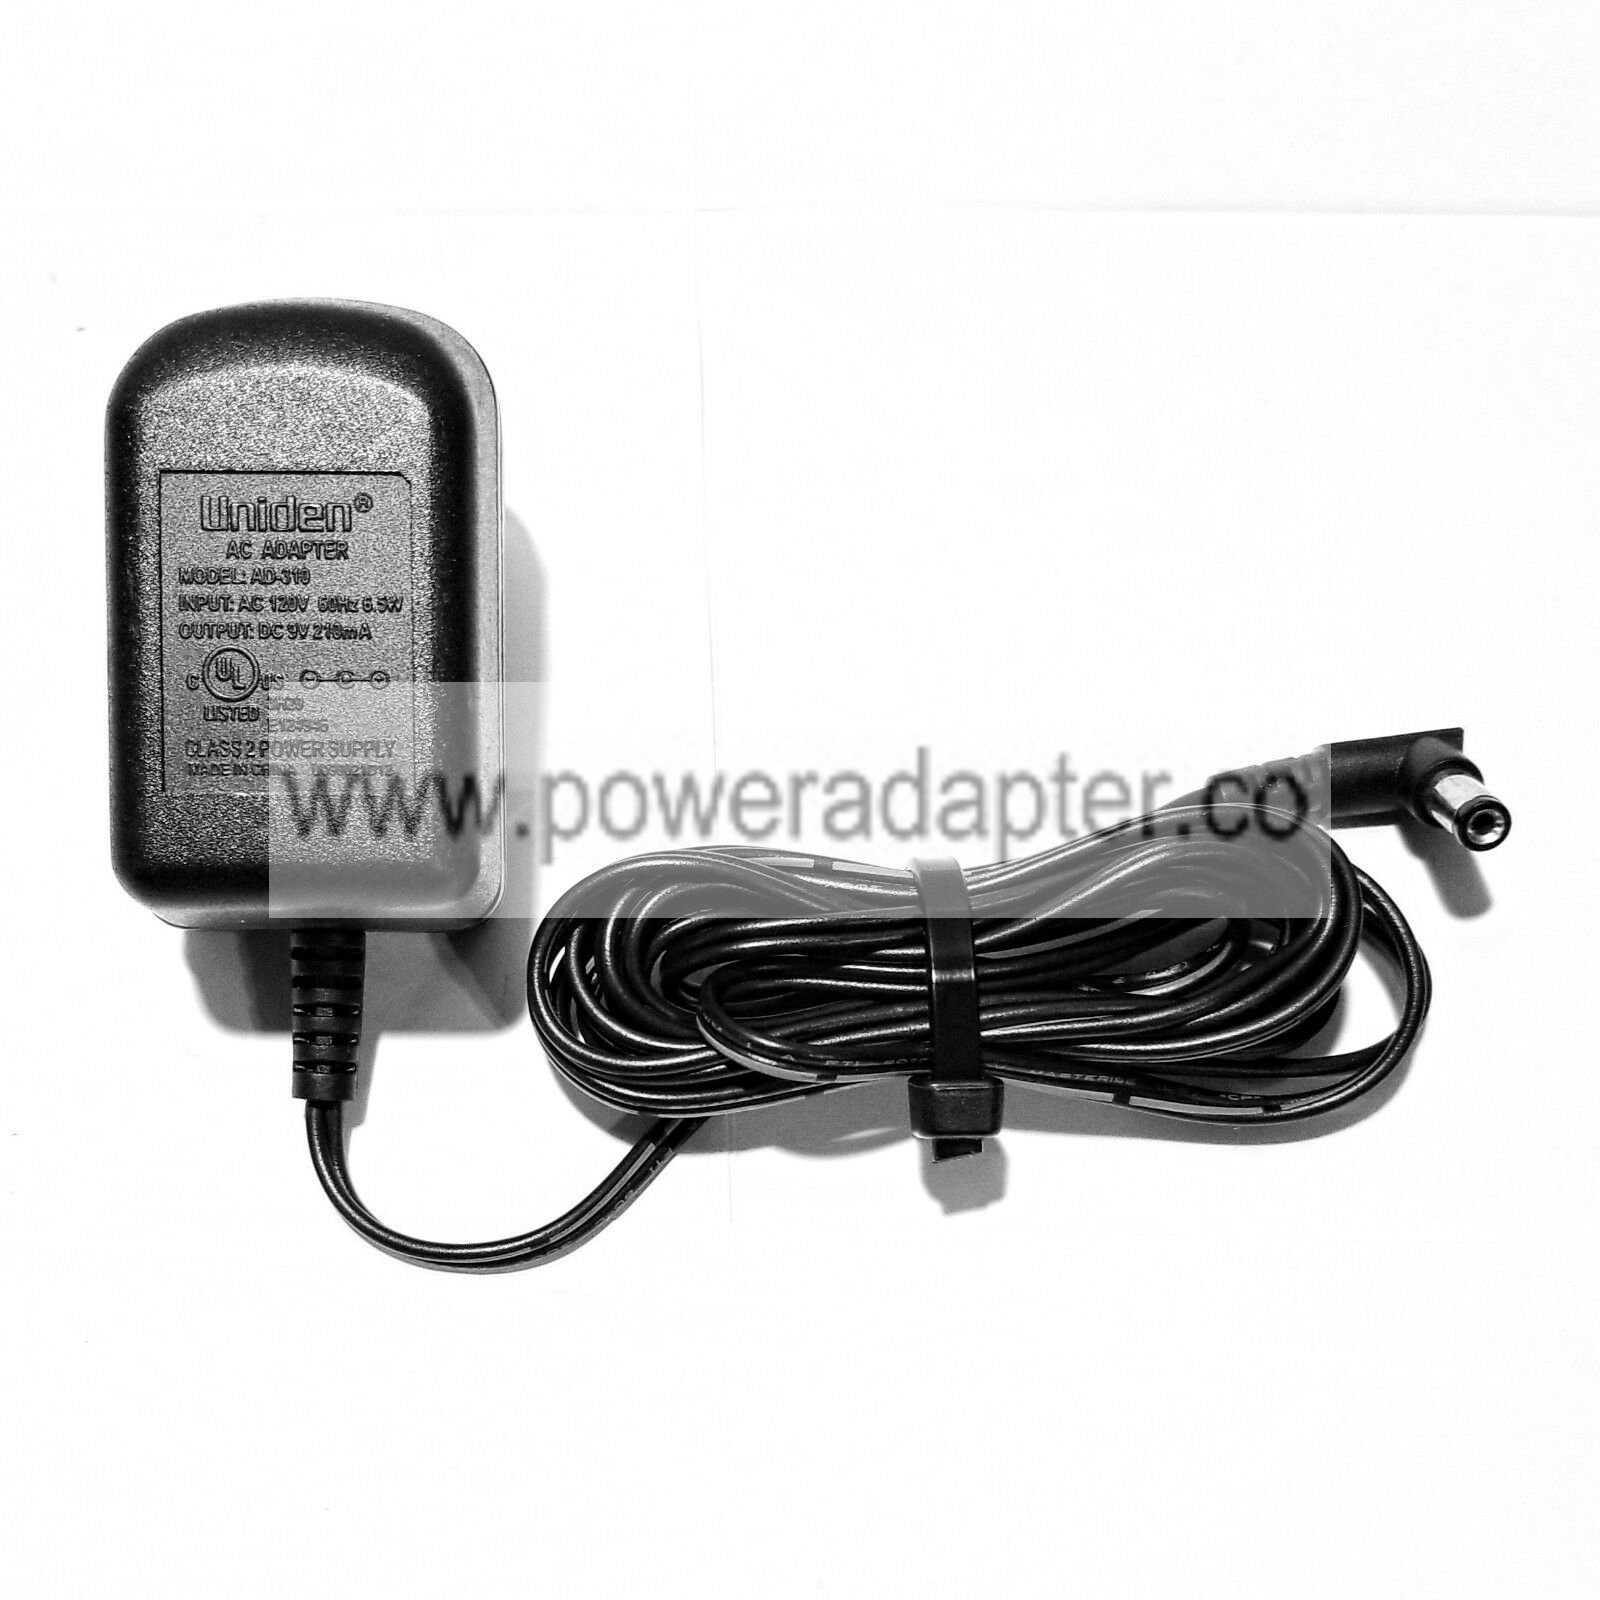 Uniden AD-0005 AC Power Supply Adapter Adaptor Charger 9V 210mA Uniden AC AD-0005 Adapter Charger Tested and in great